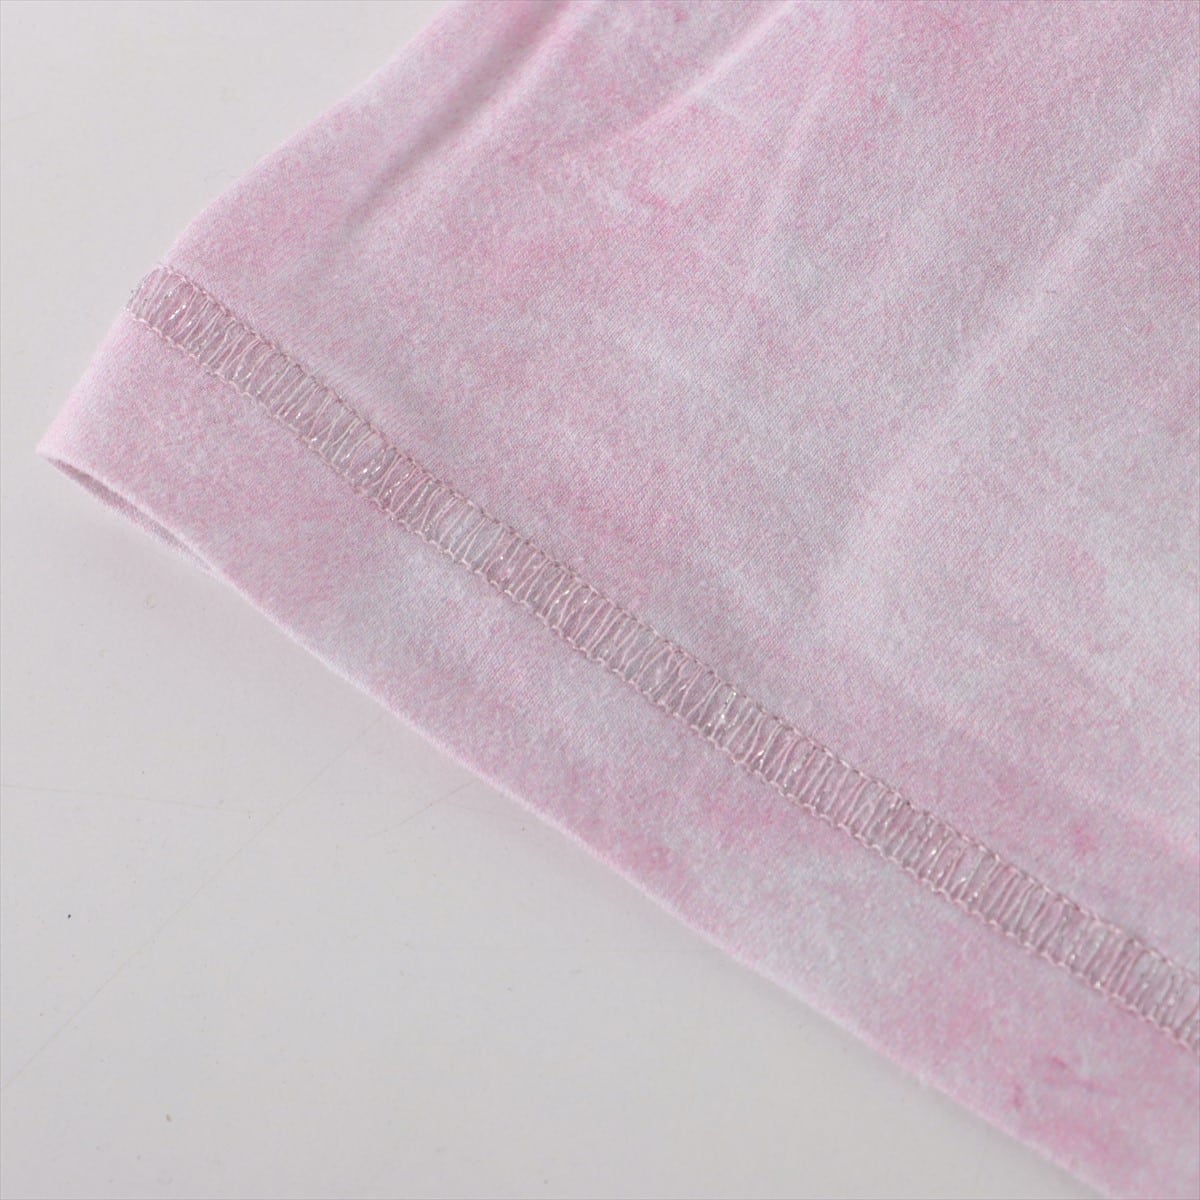 Chanel Coco Mark 09C Cotton & polyurethane T-shirt 38 Ladies' Pink  Tie-dye